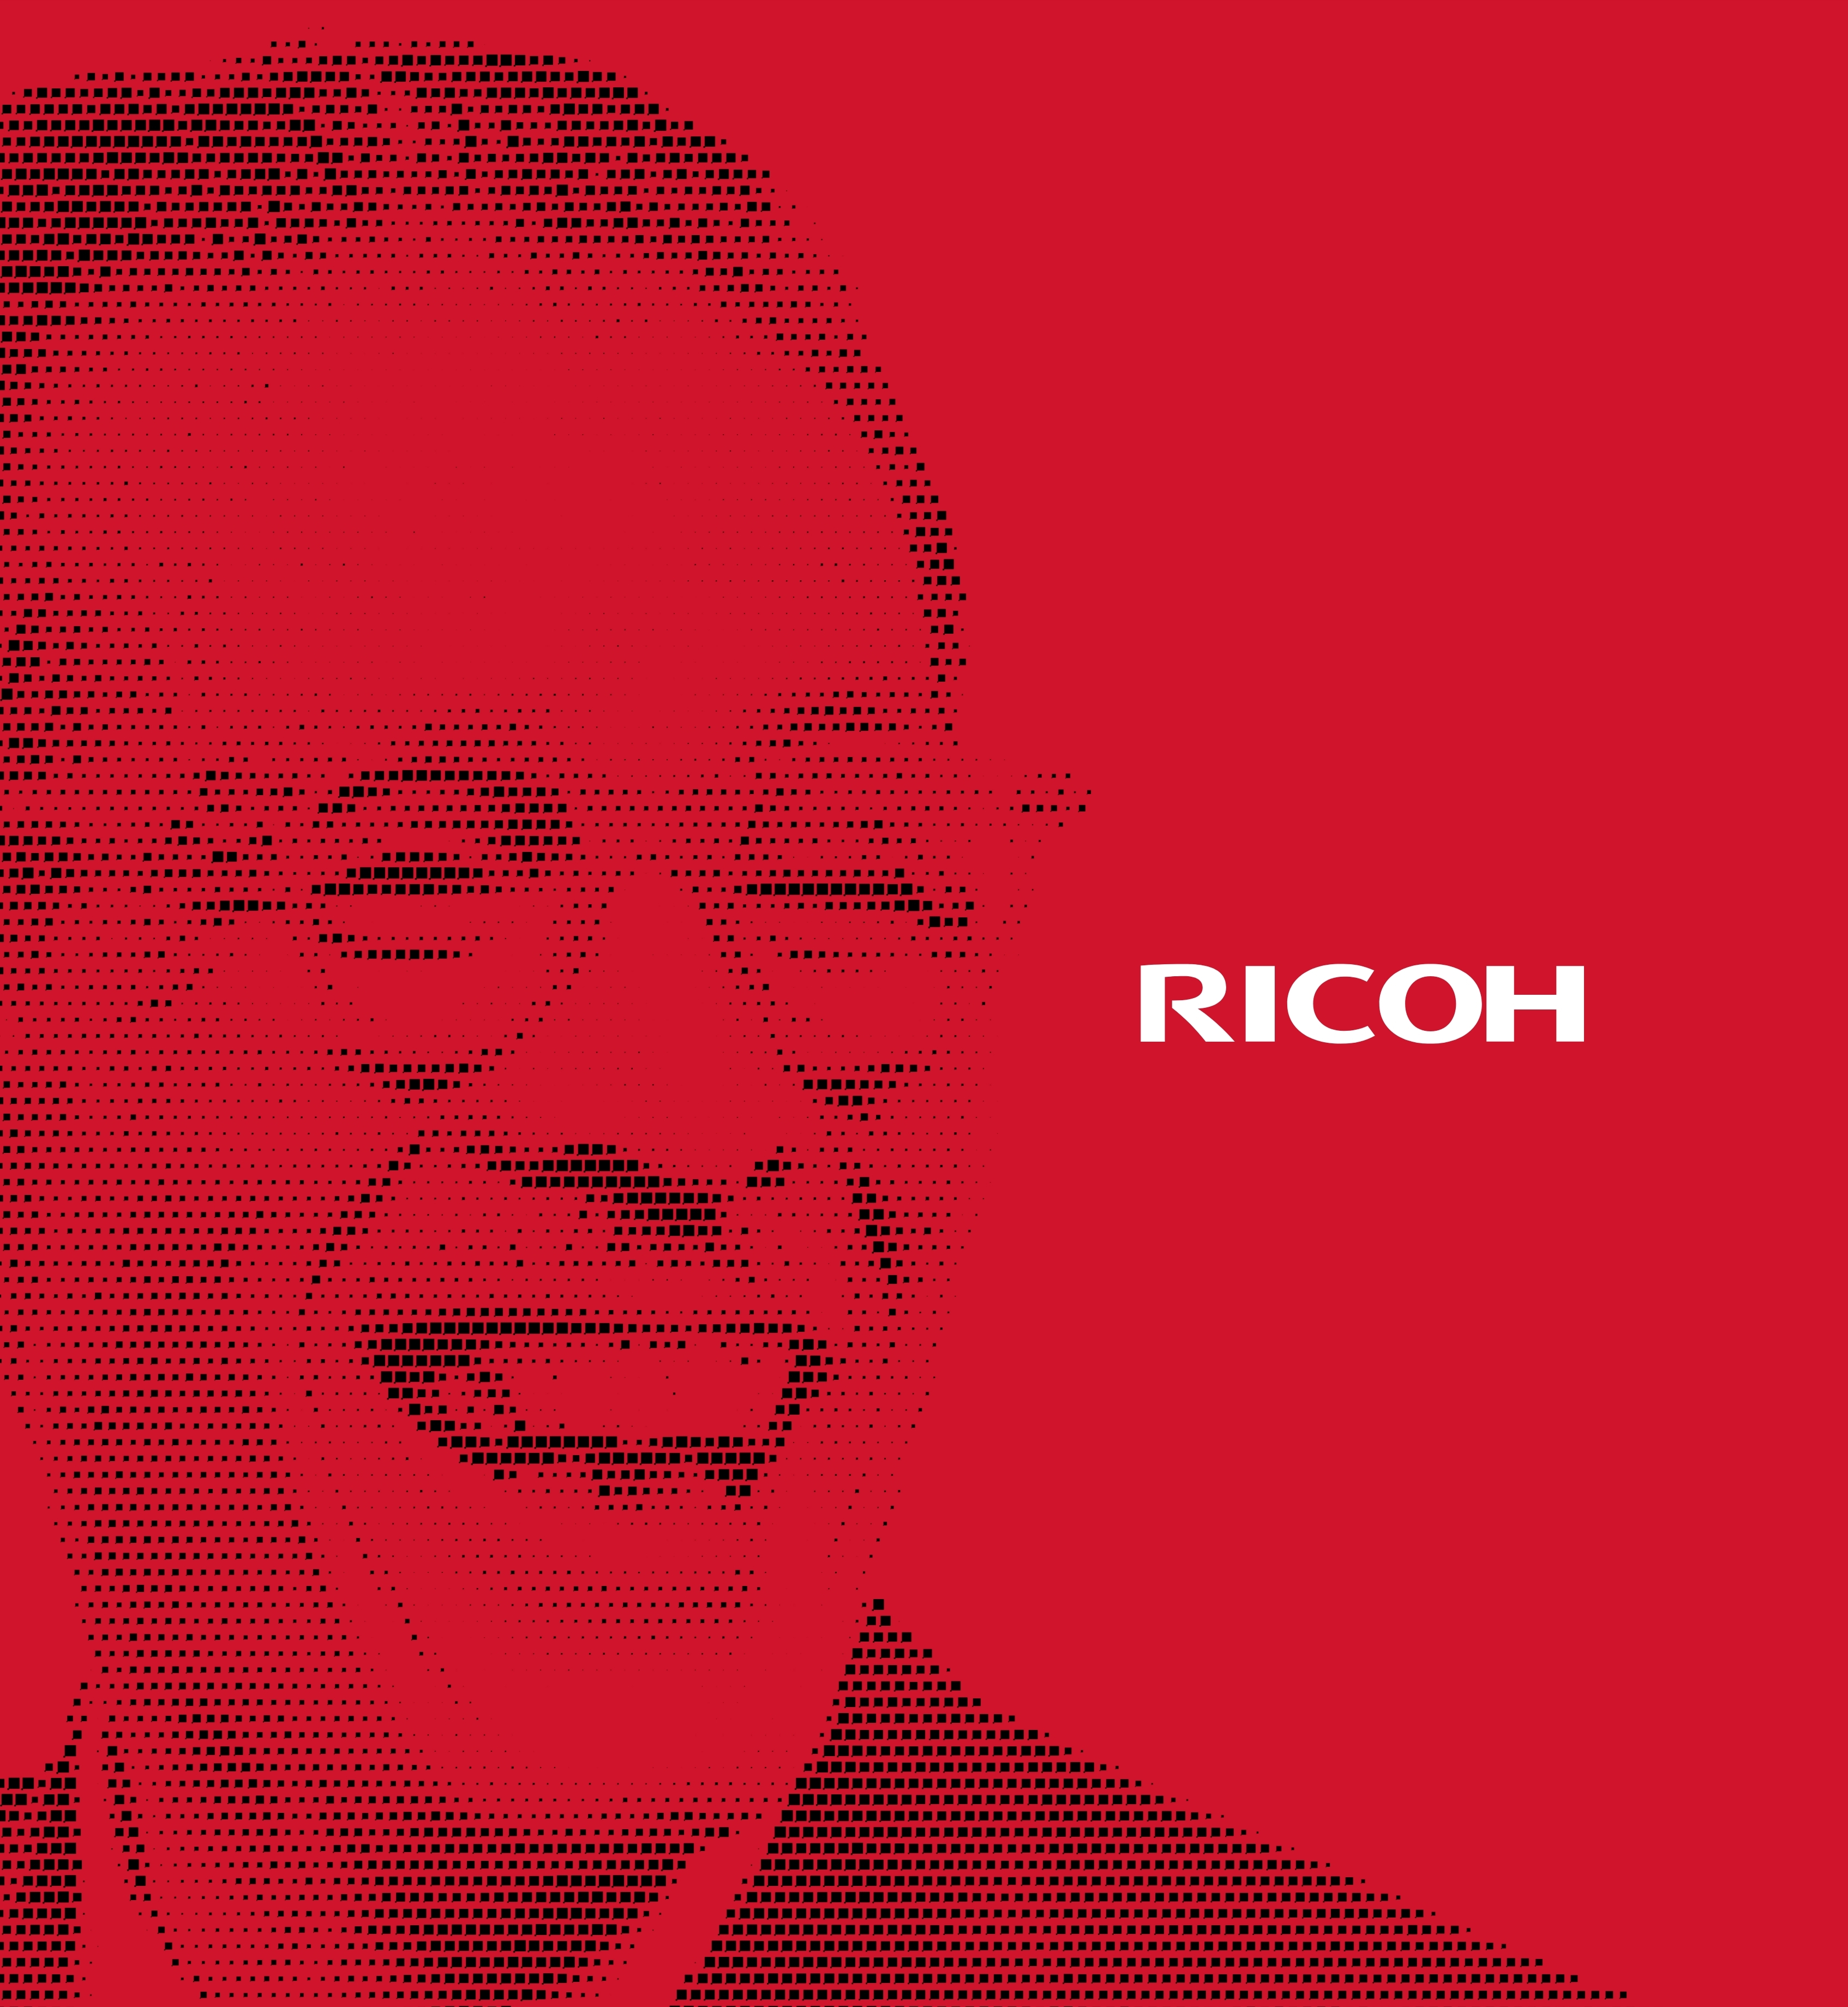 Ricoh Feature